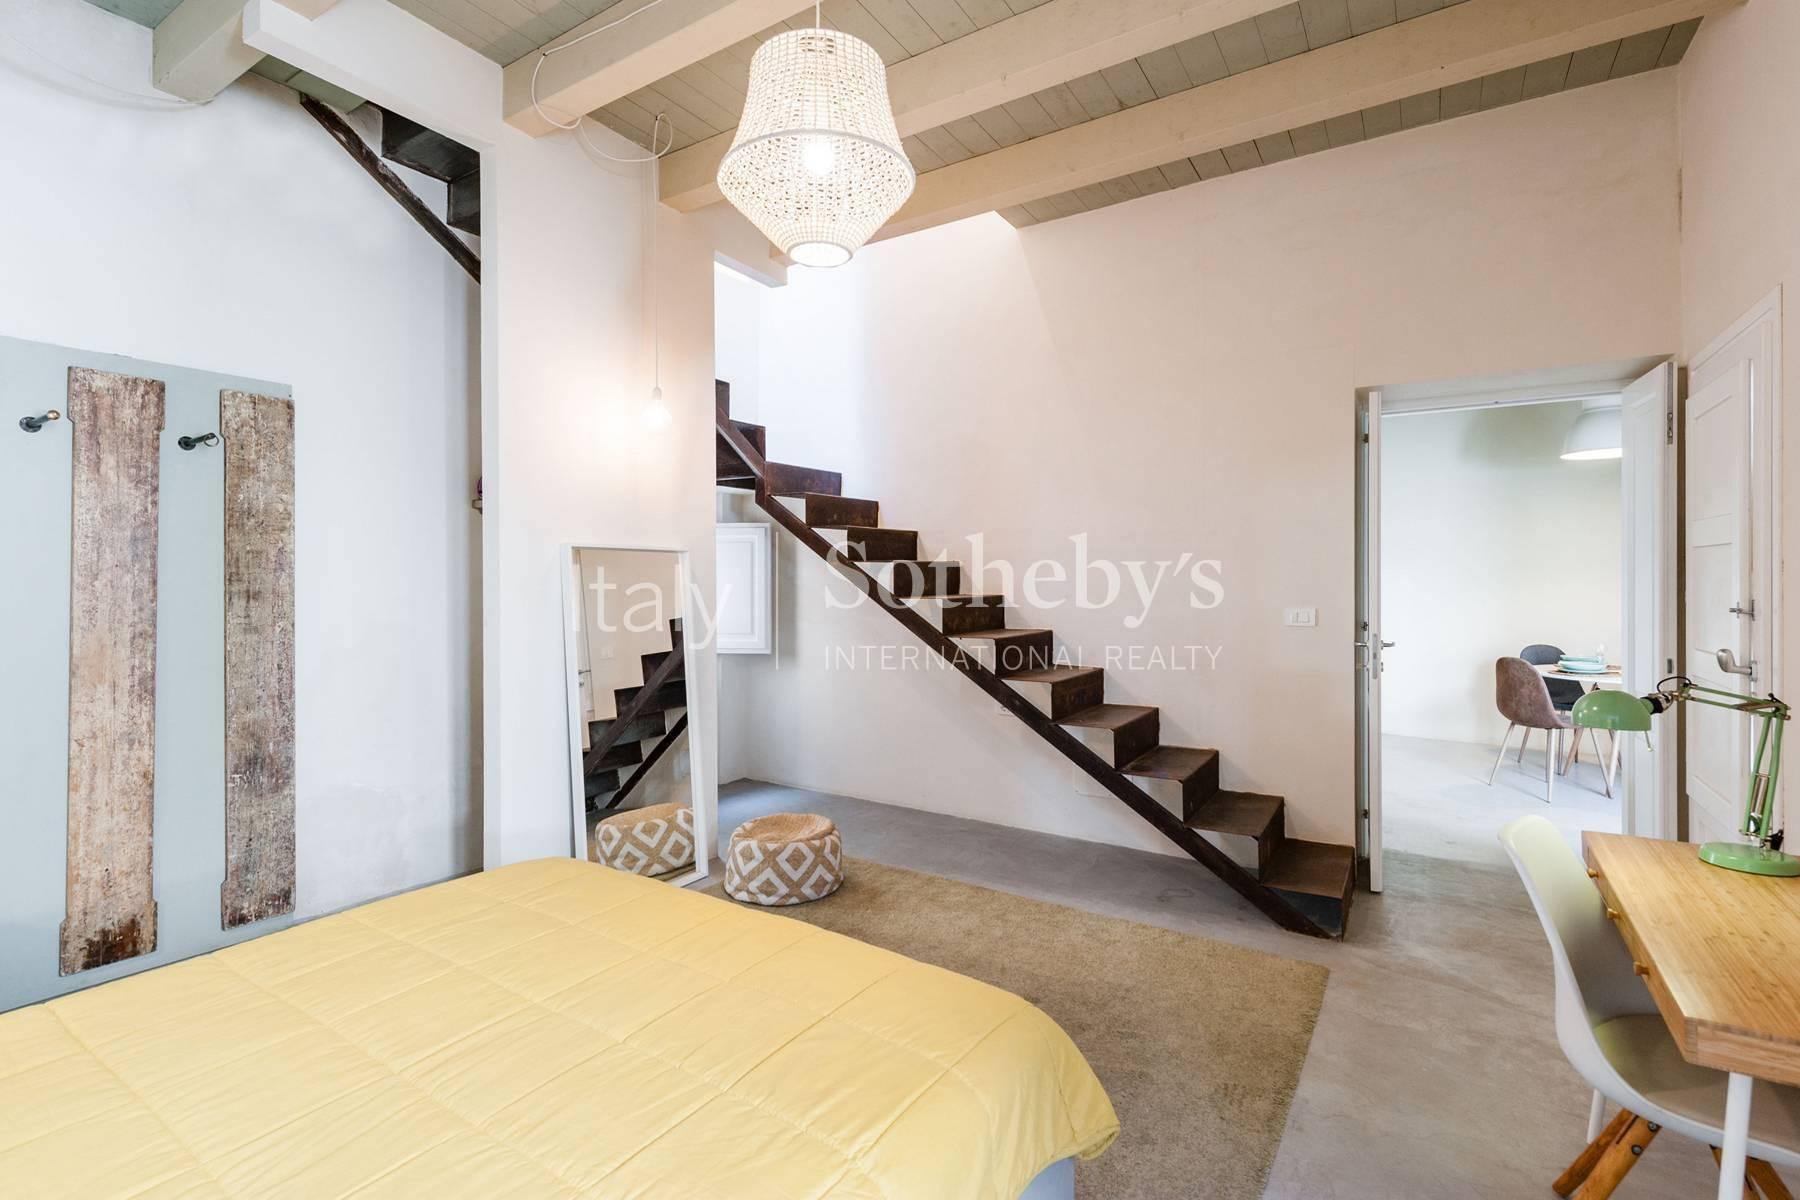 Apartment in Ortigia on the Giudecca with double terrace - 9